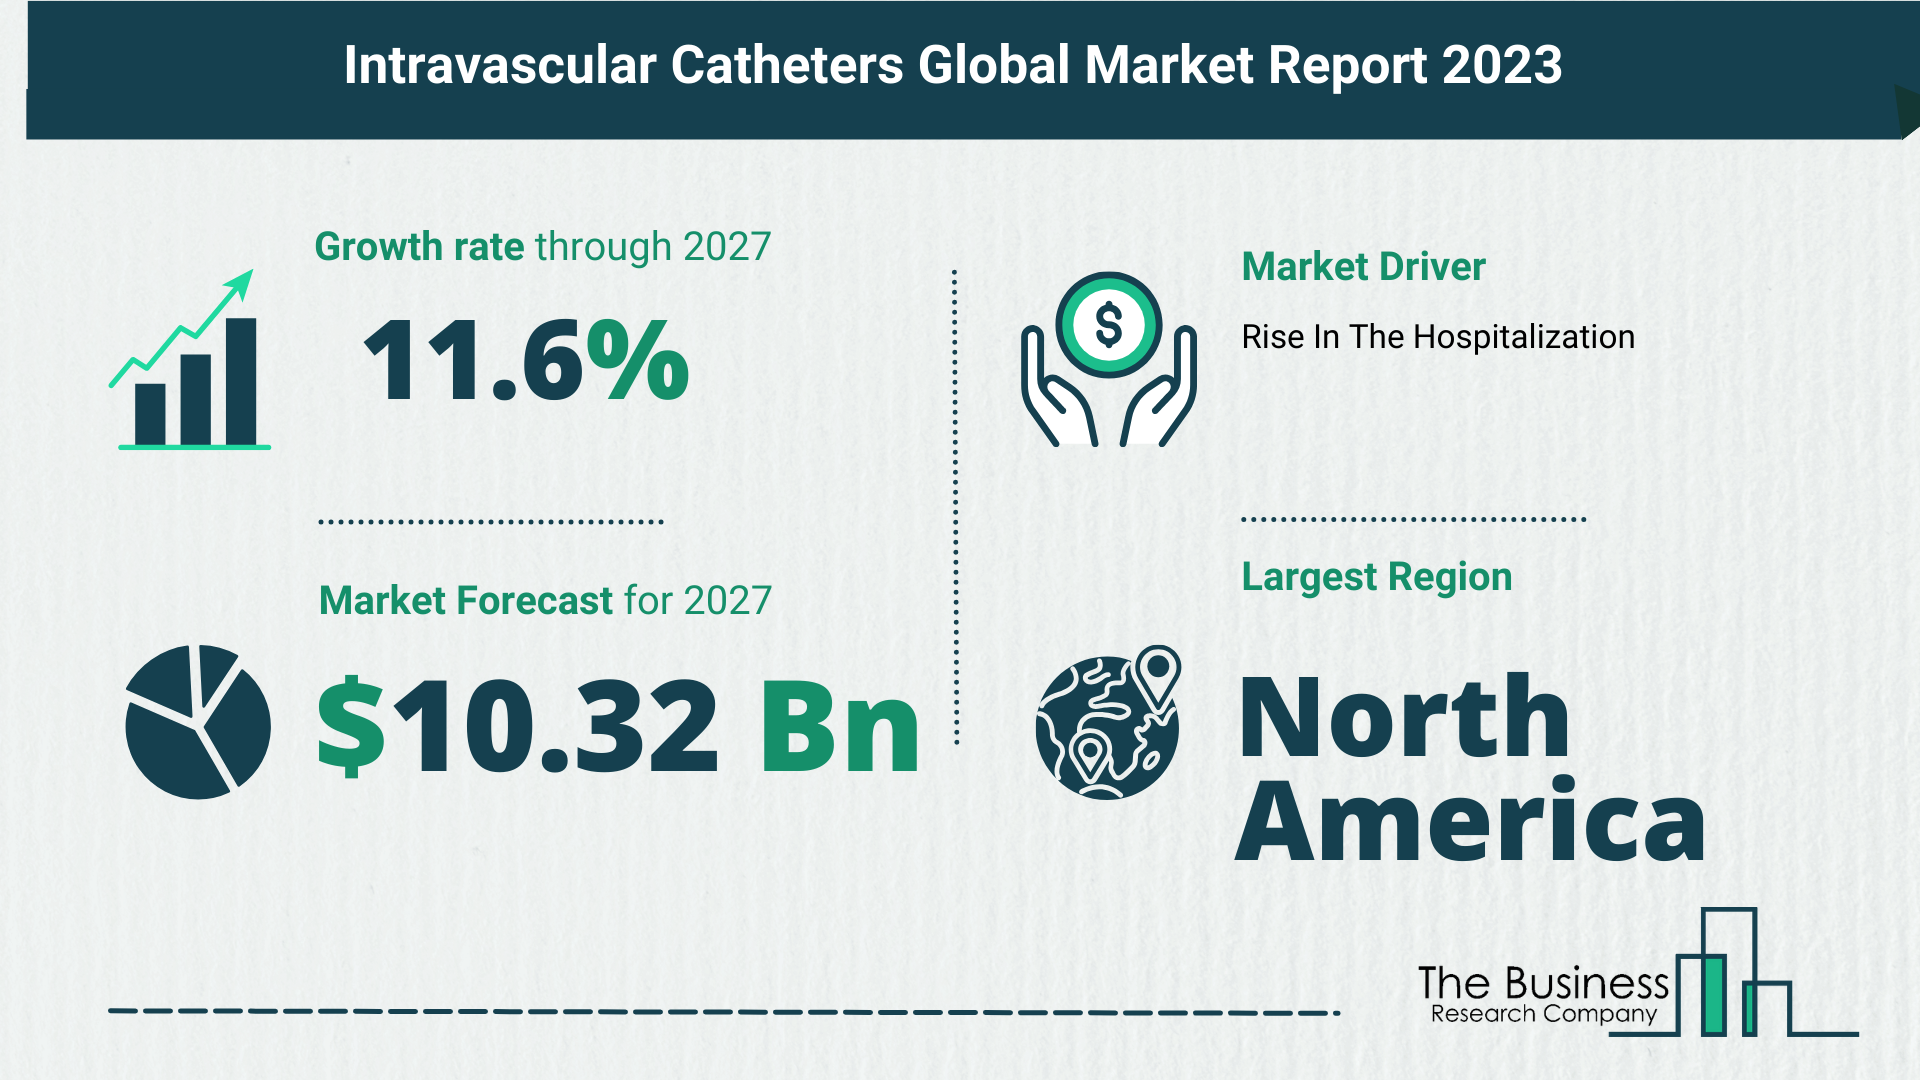 Global Intravascular Catheters Market